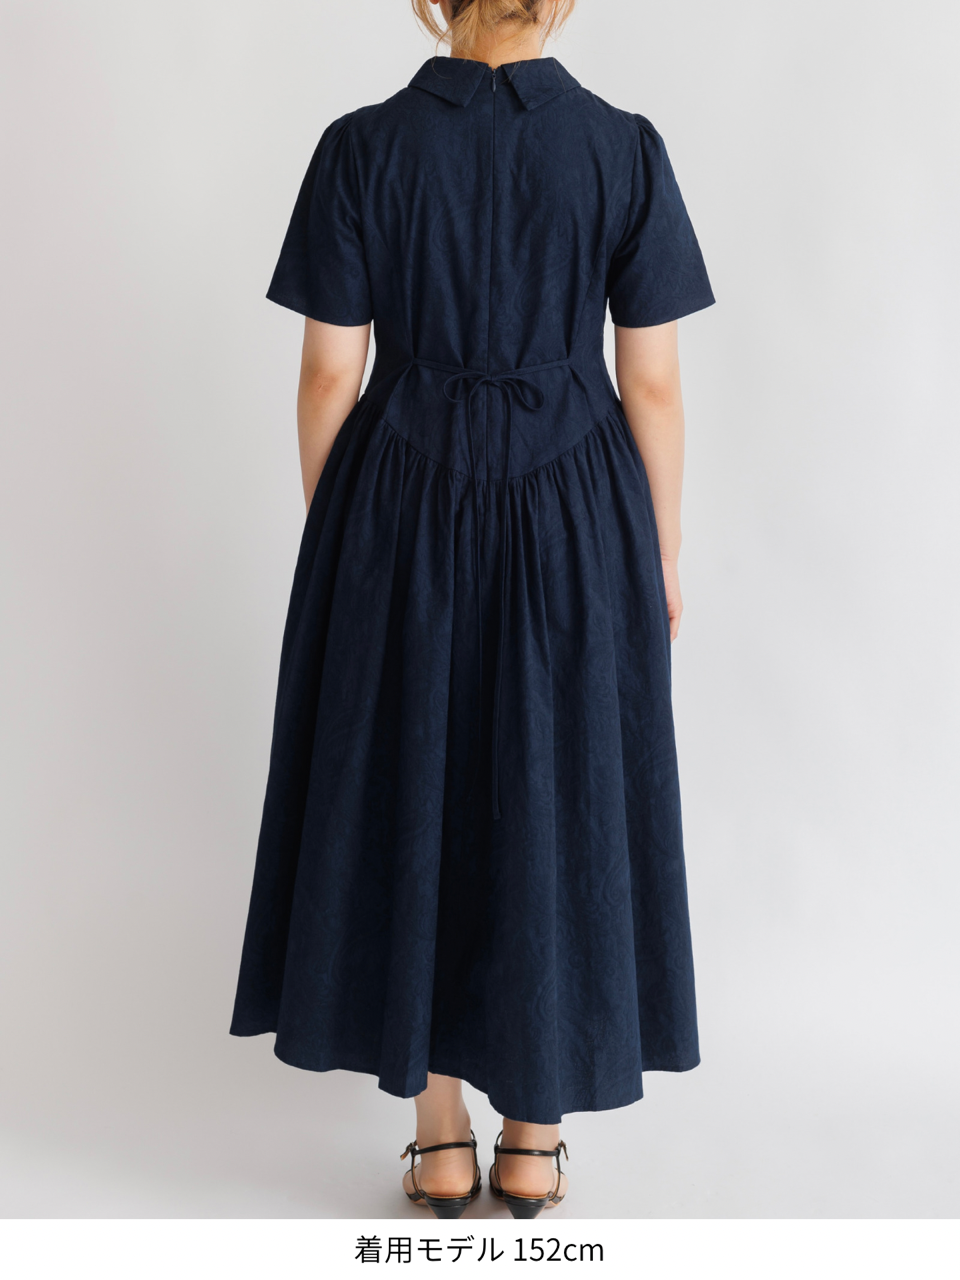 Annabelle dress / navy